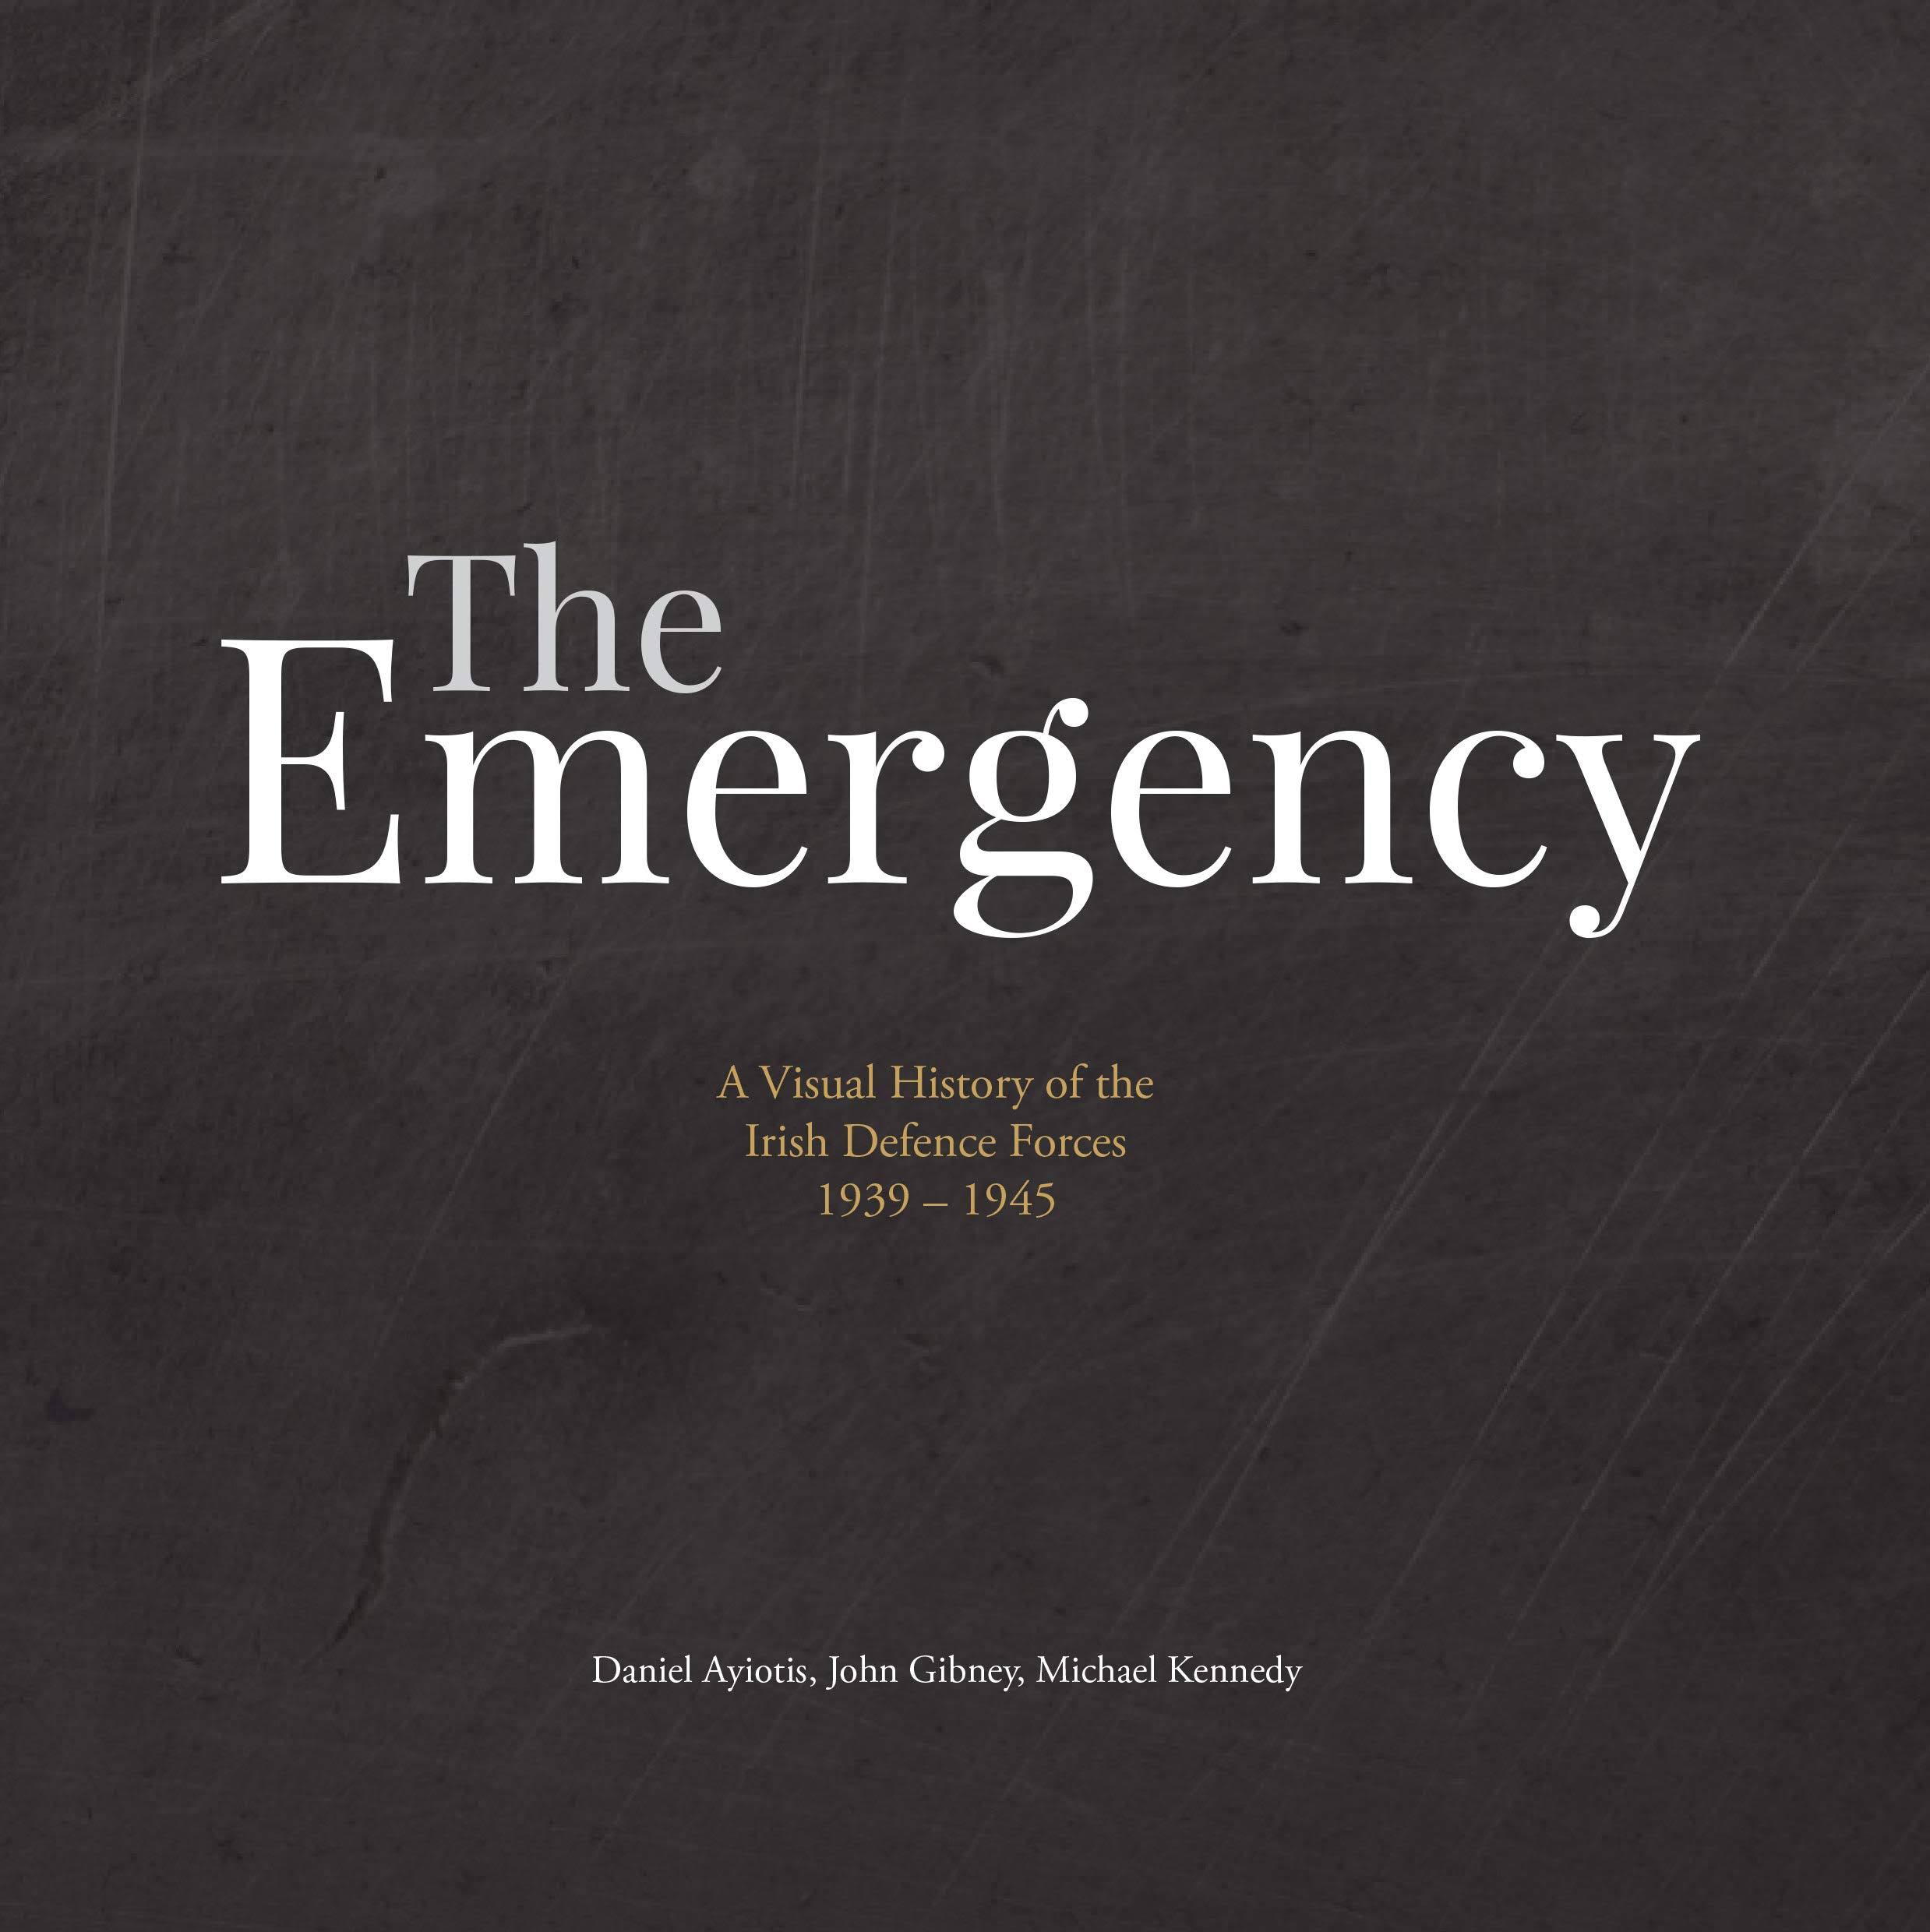 The Emergency by John Gibney